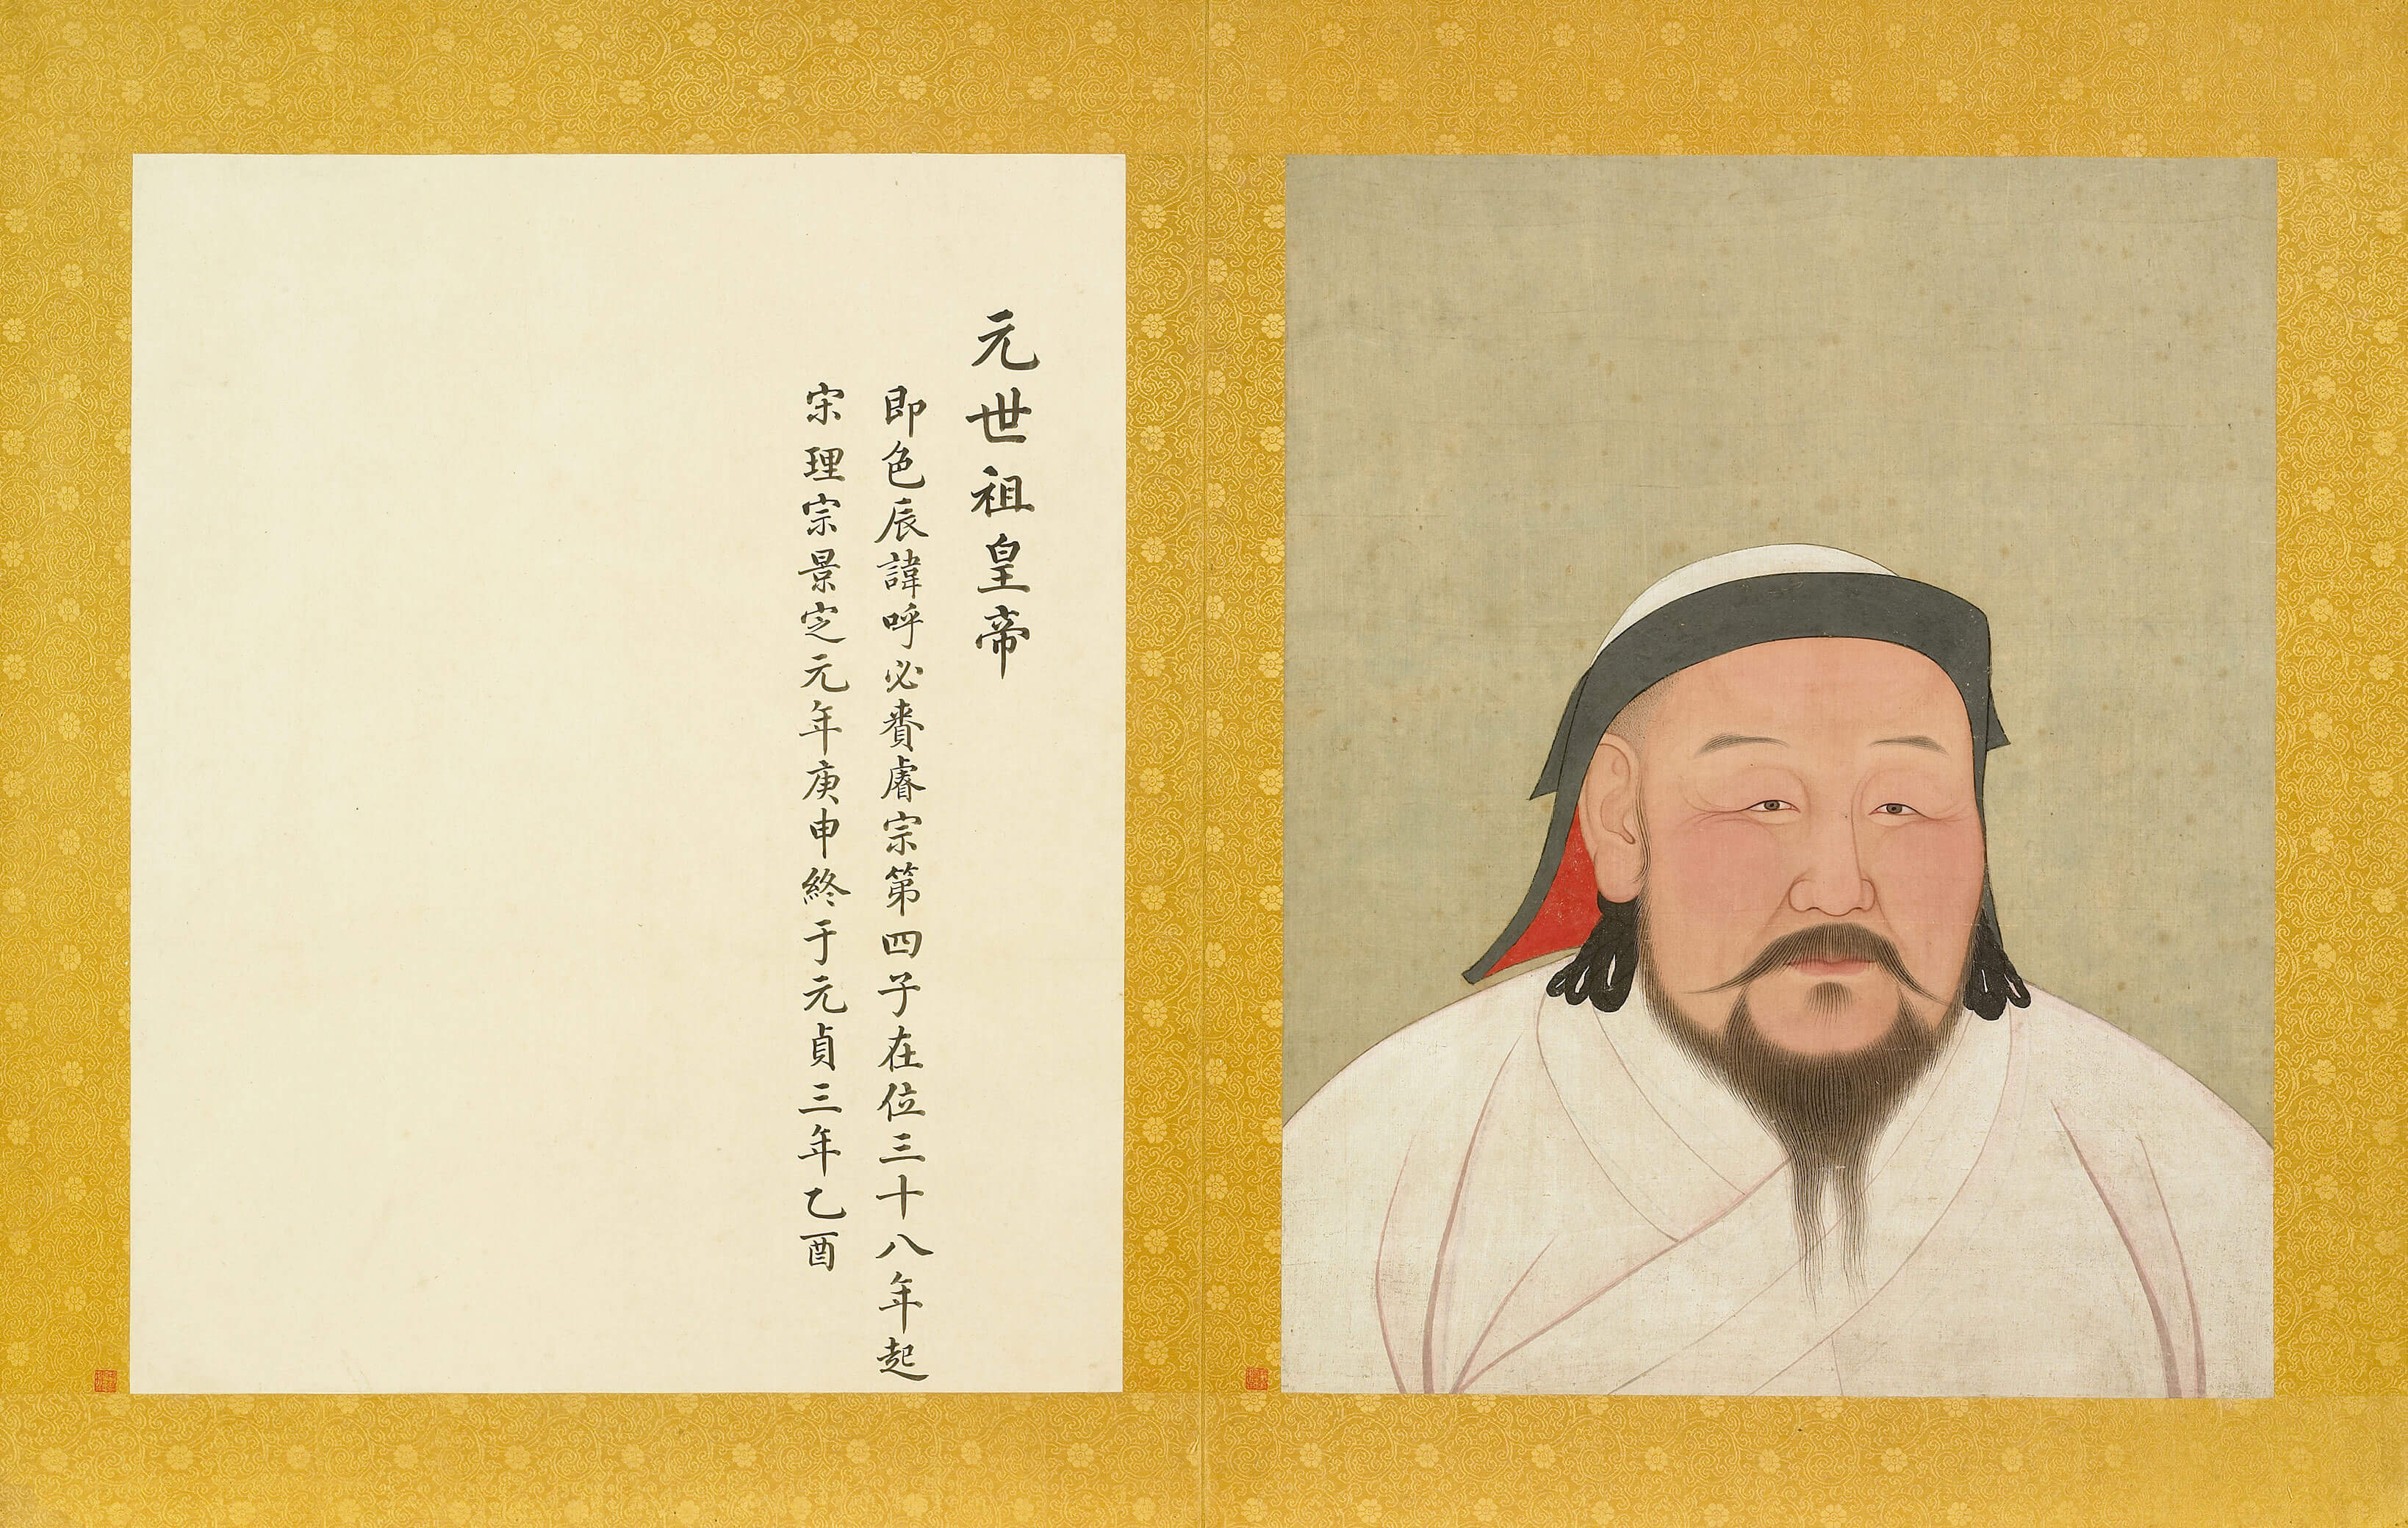 Emperor Shizu of the Yuan